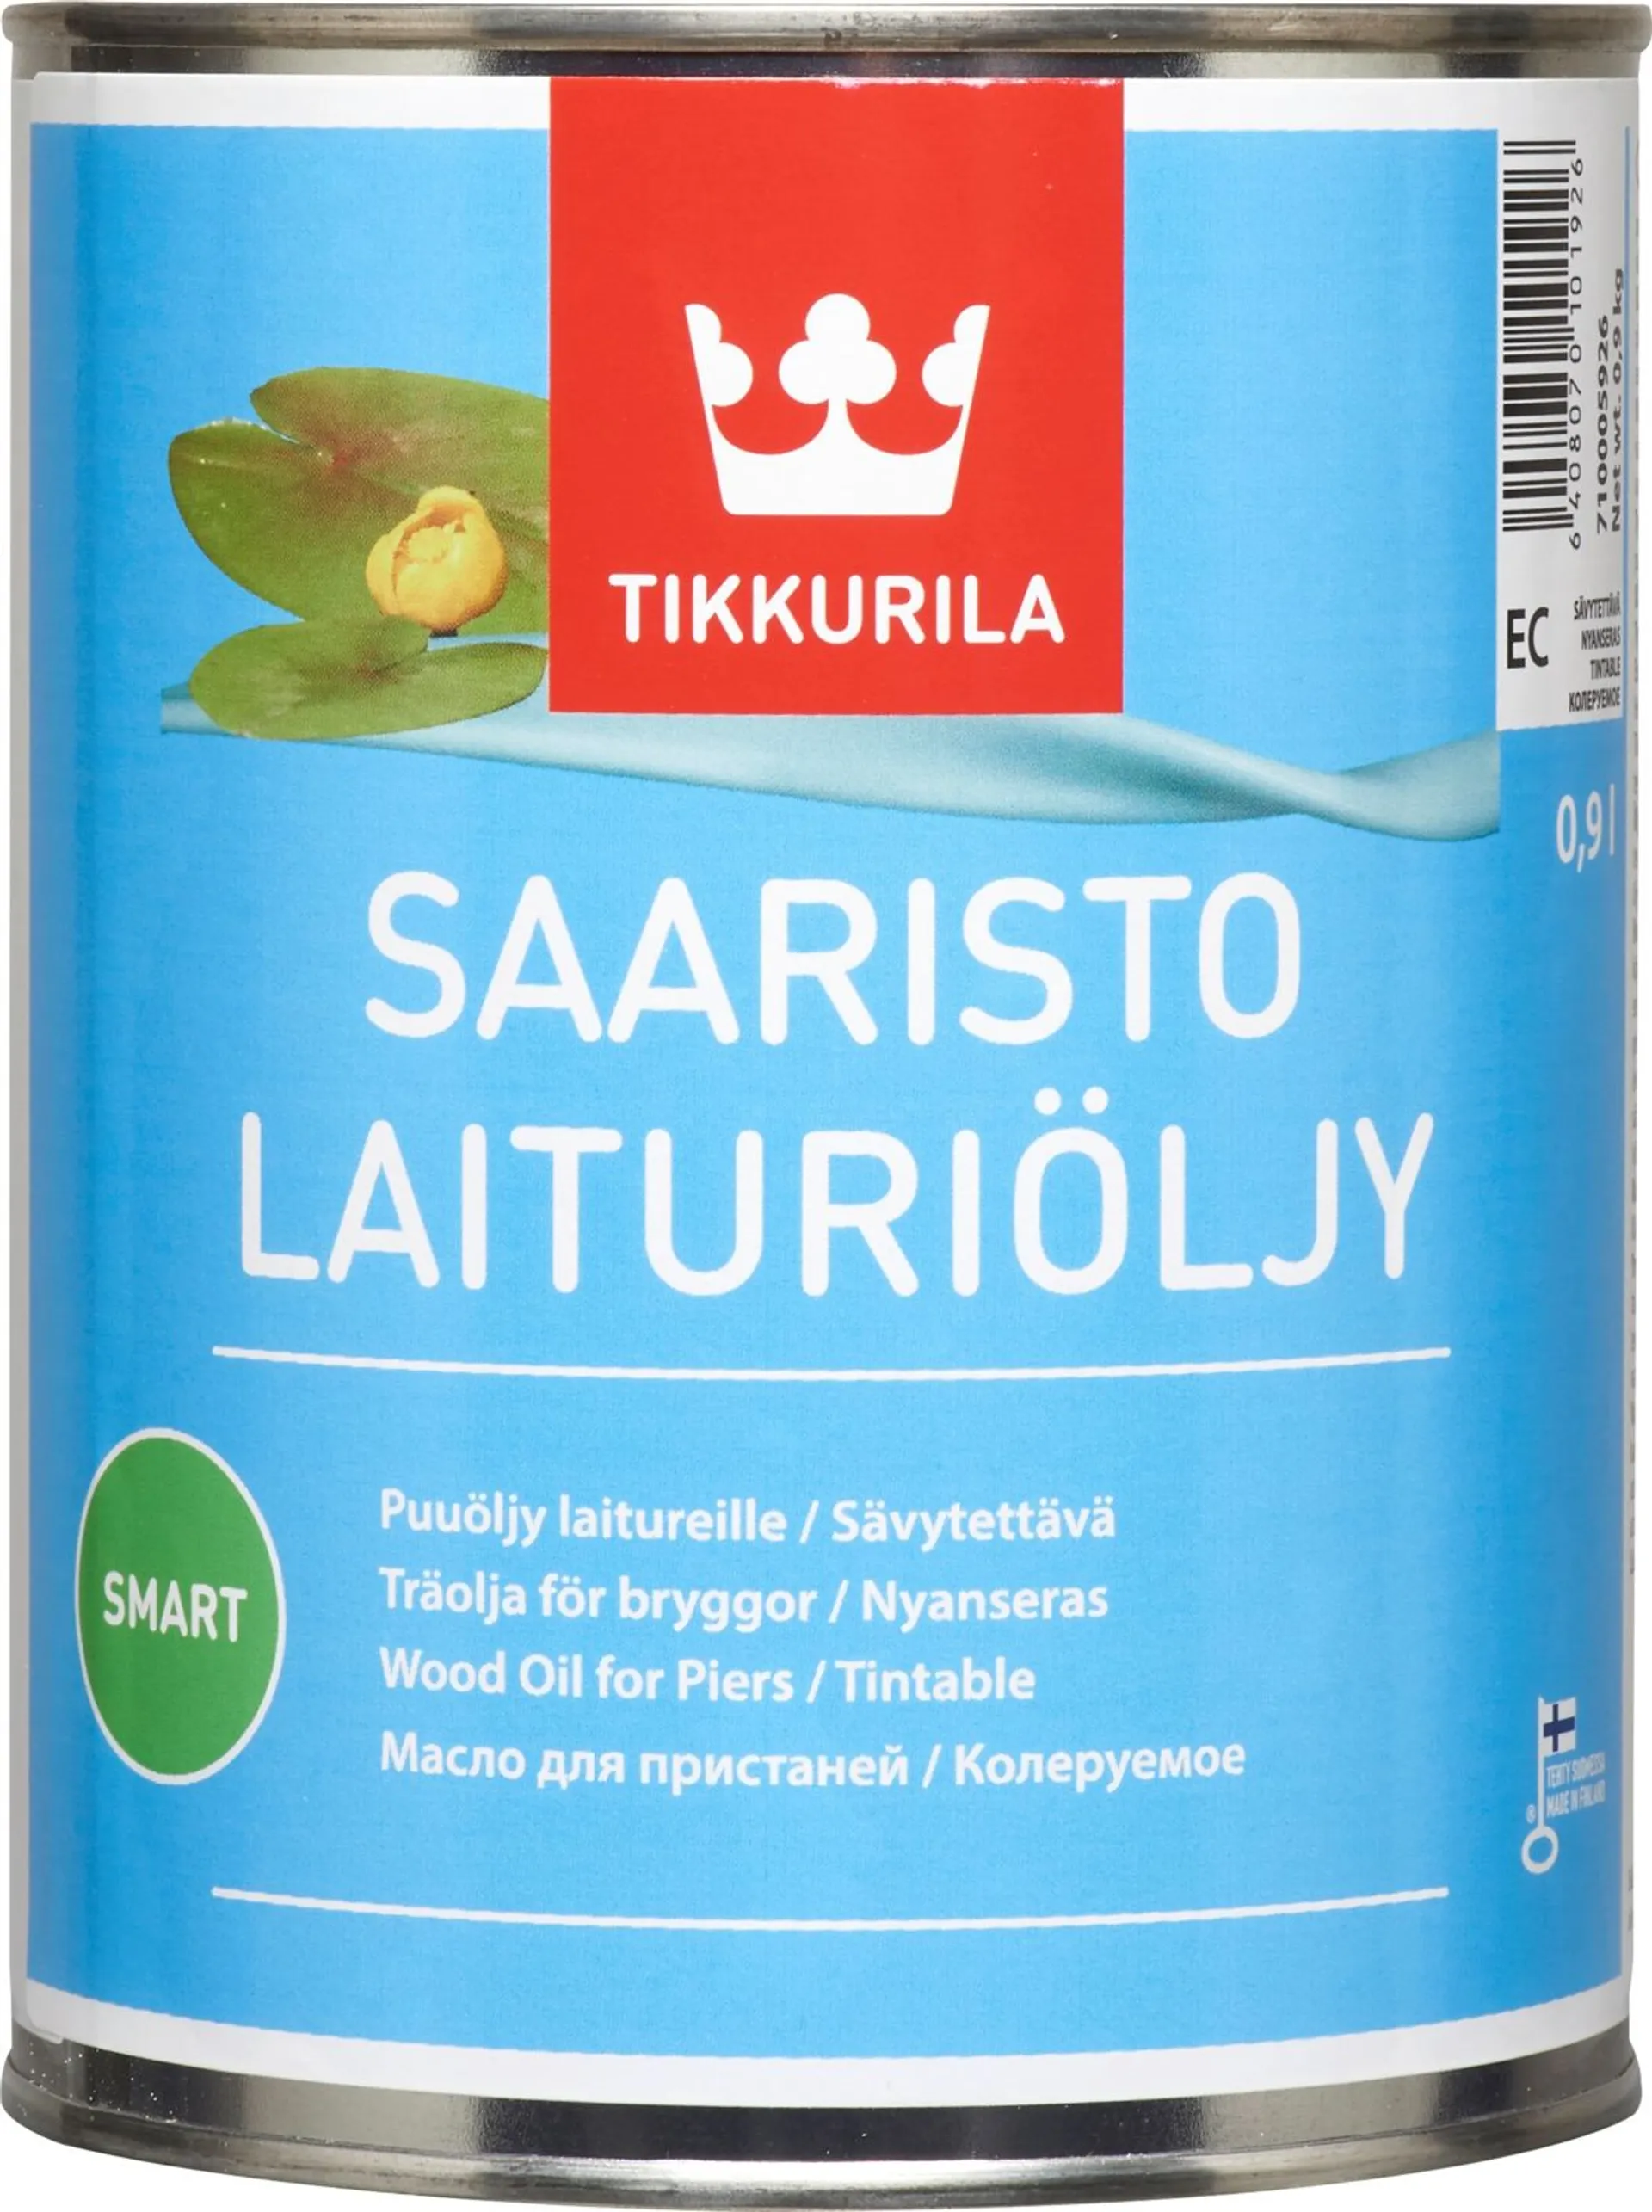 Tikkurila Saaristo Laituriöljy EC 0,9 l